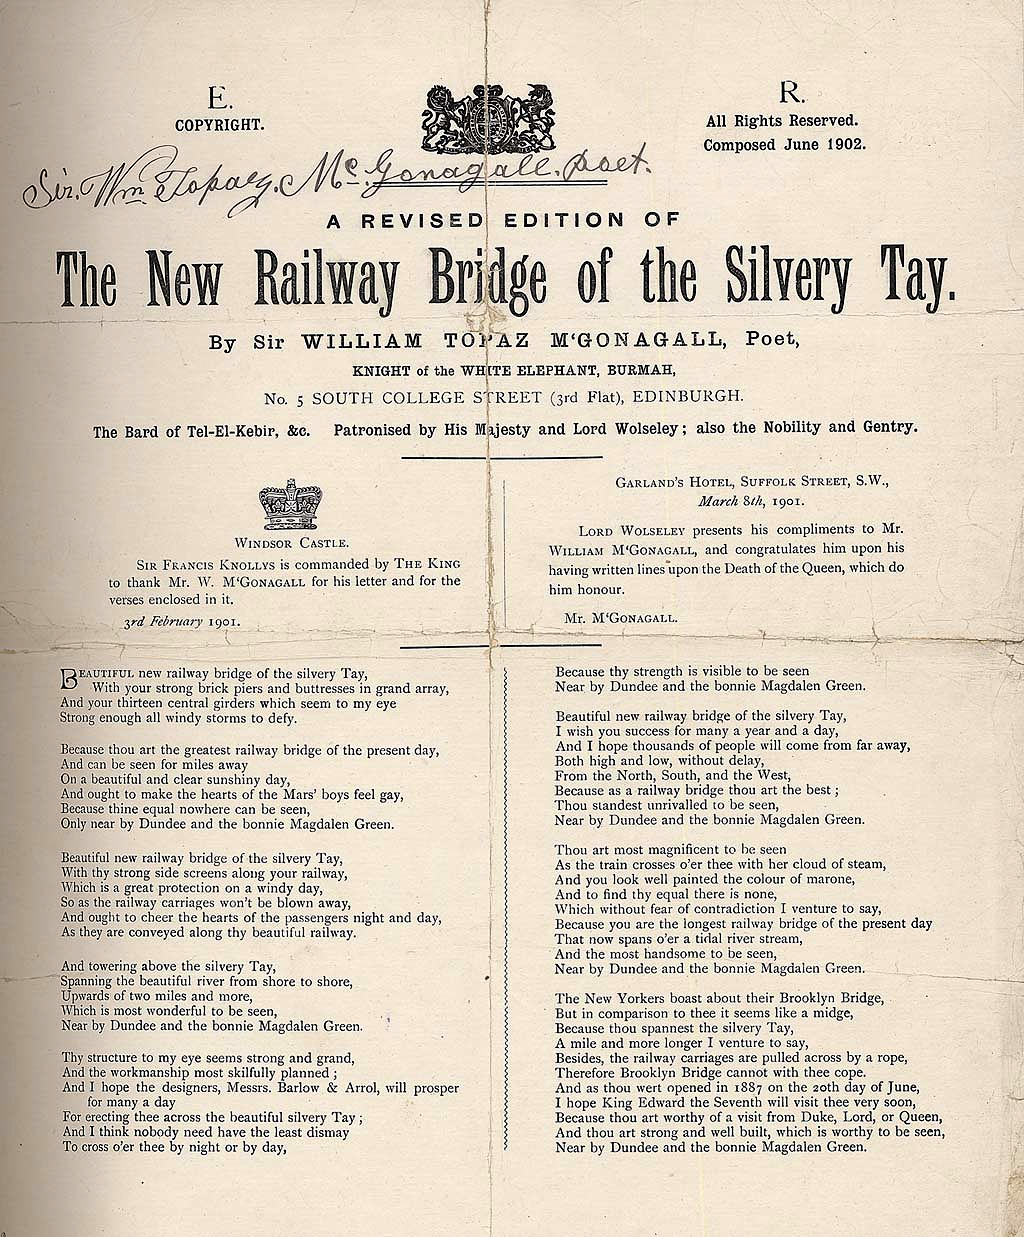 The New Railway Bridge of the Silvery Tay